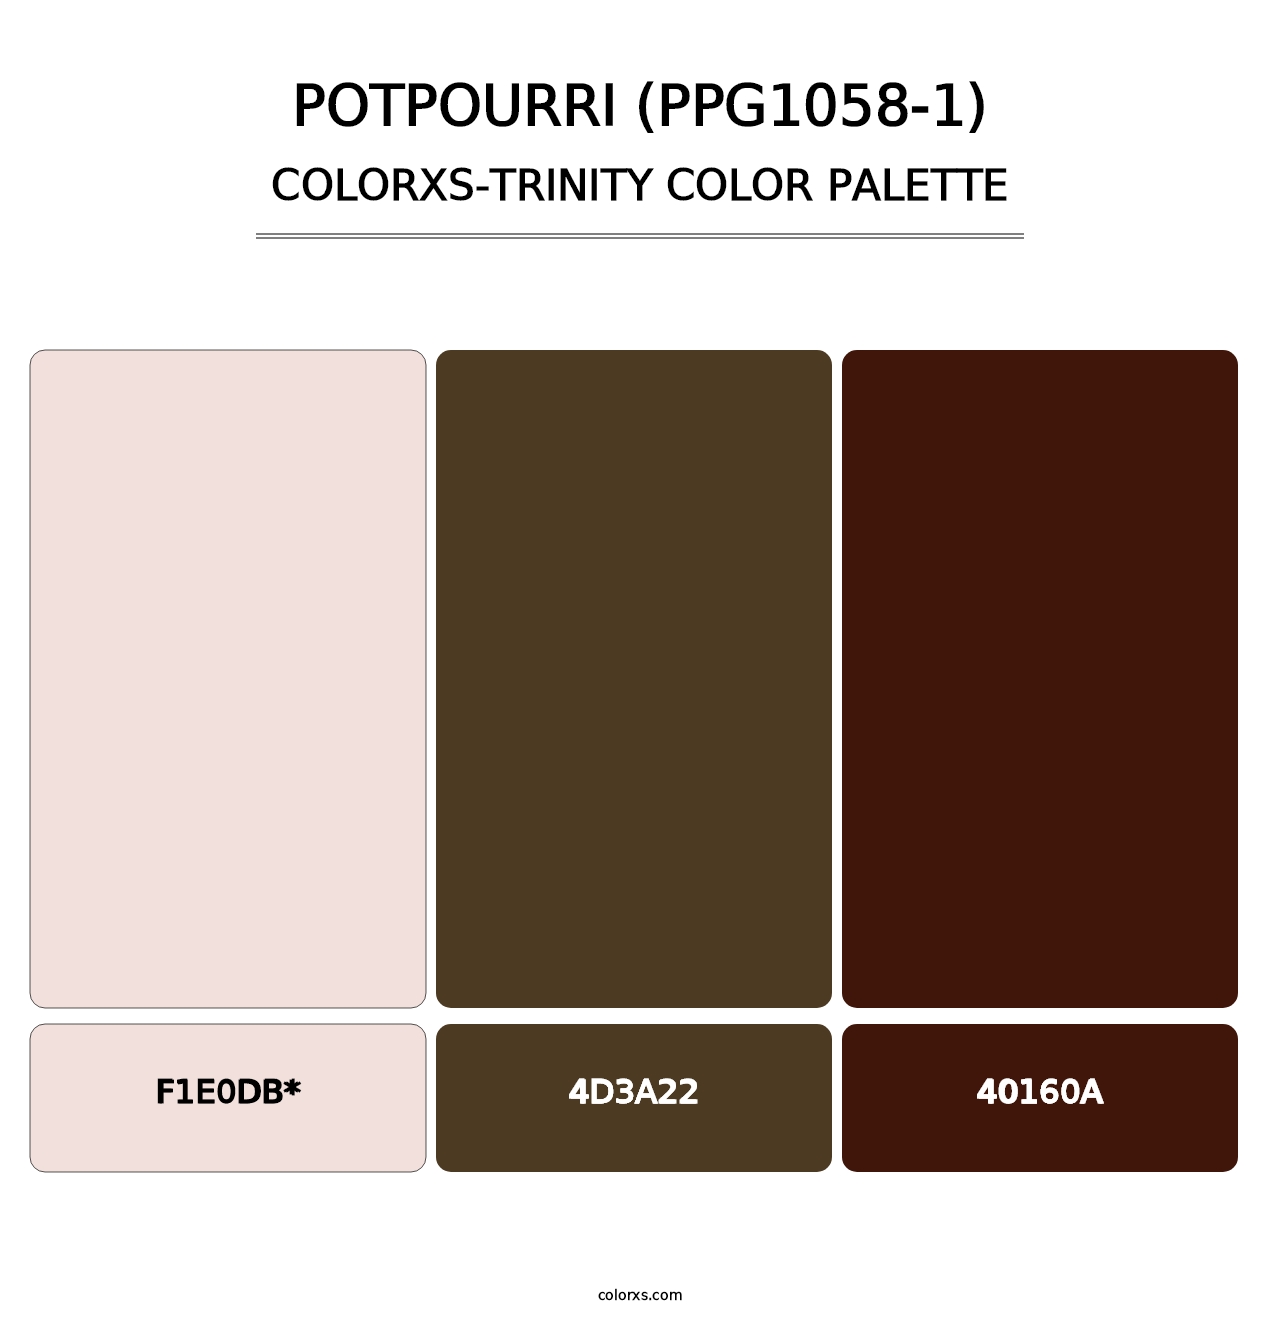 Potpourri (PPG1058-1) - Colorxs Trinity Palette